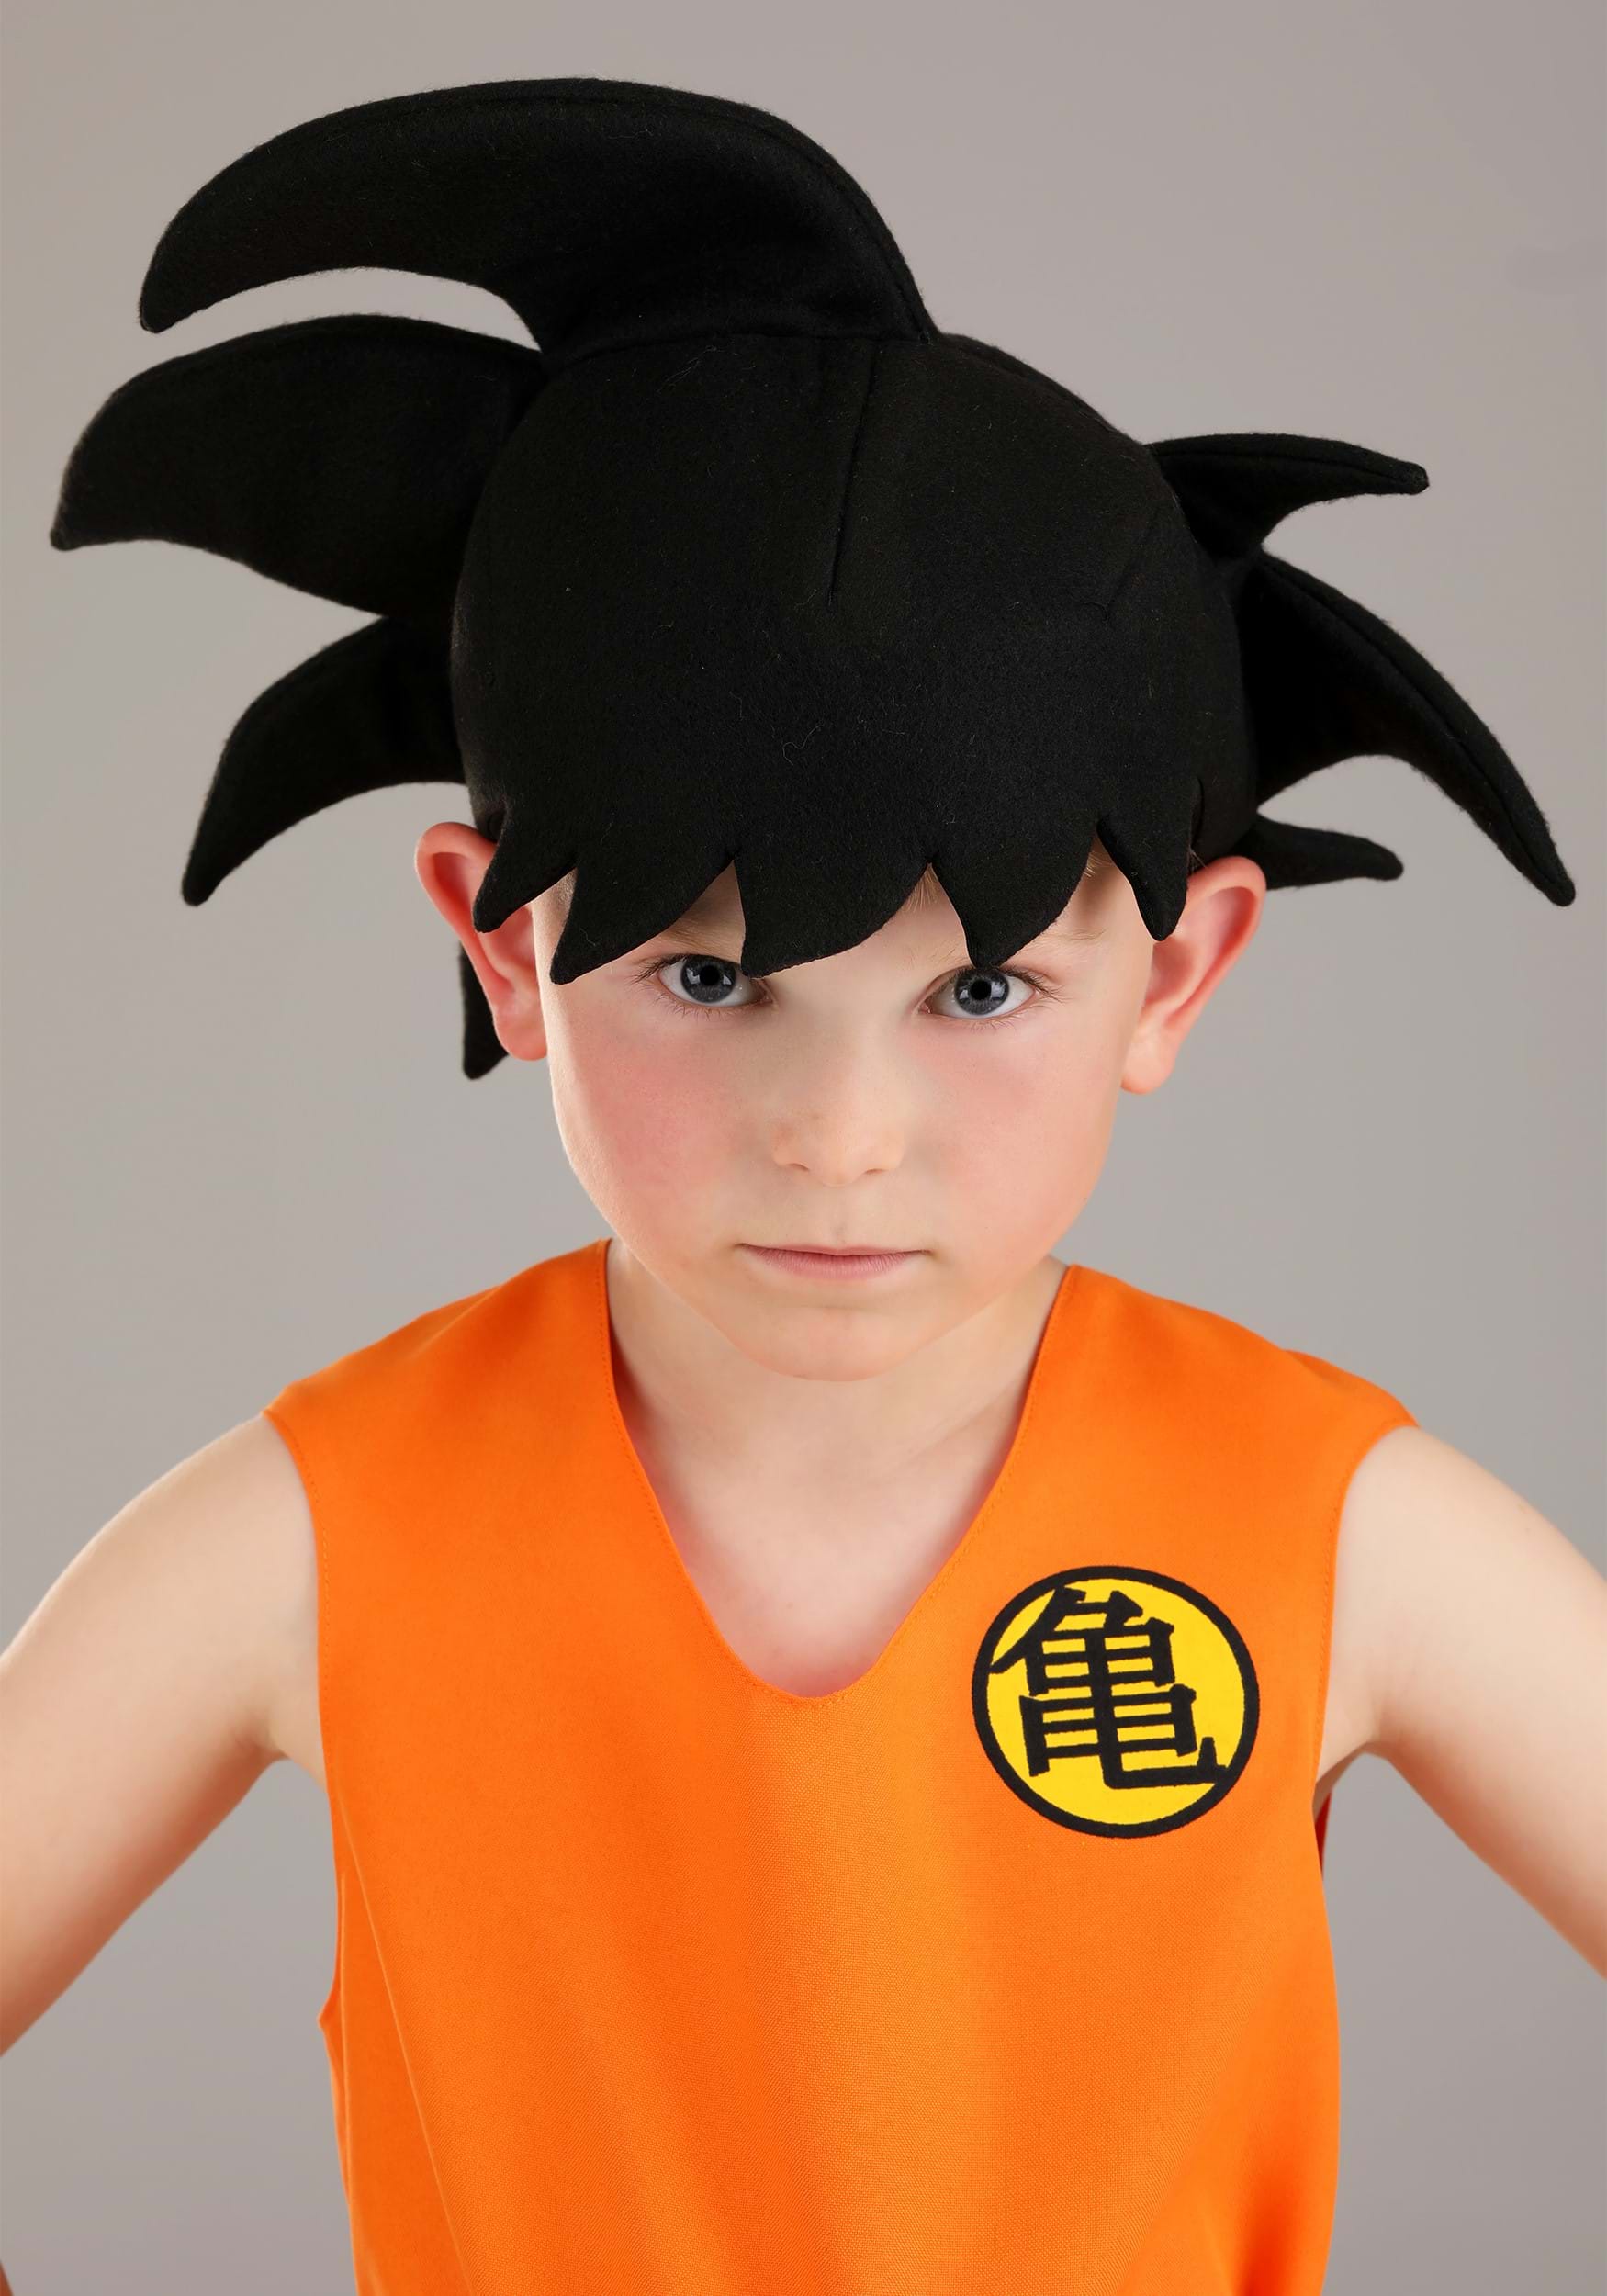 Dragon Ball Z Kid Goku Kid's Costume